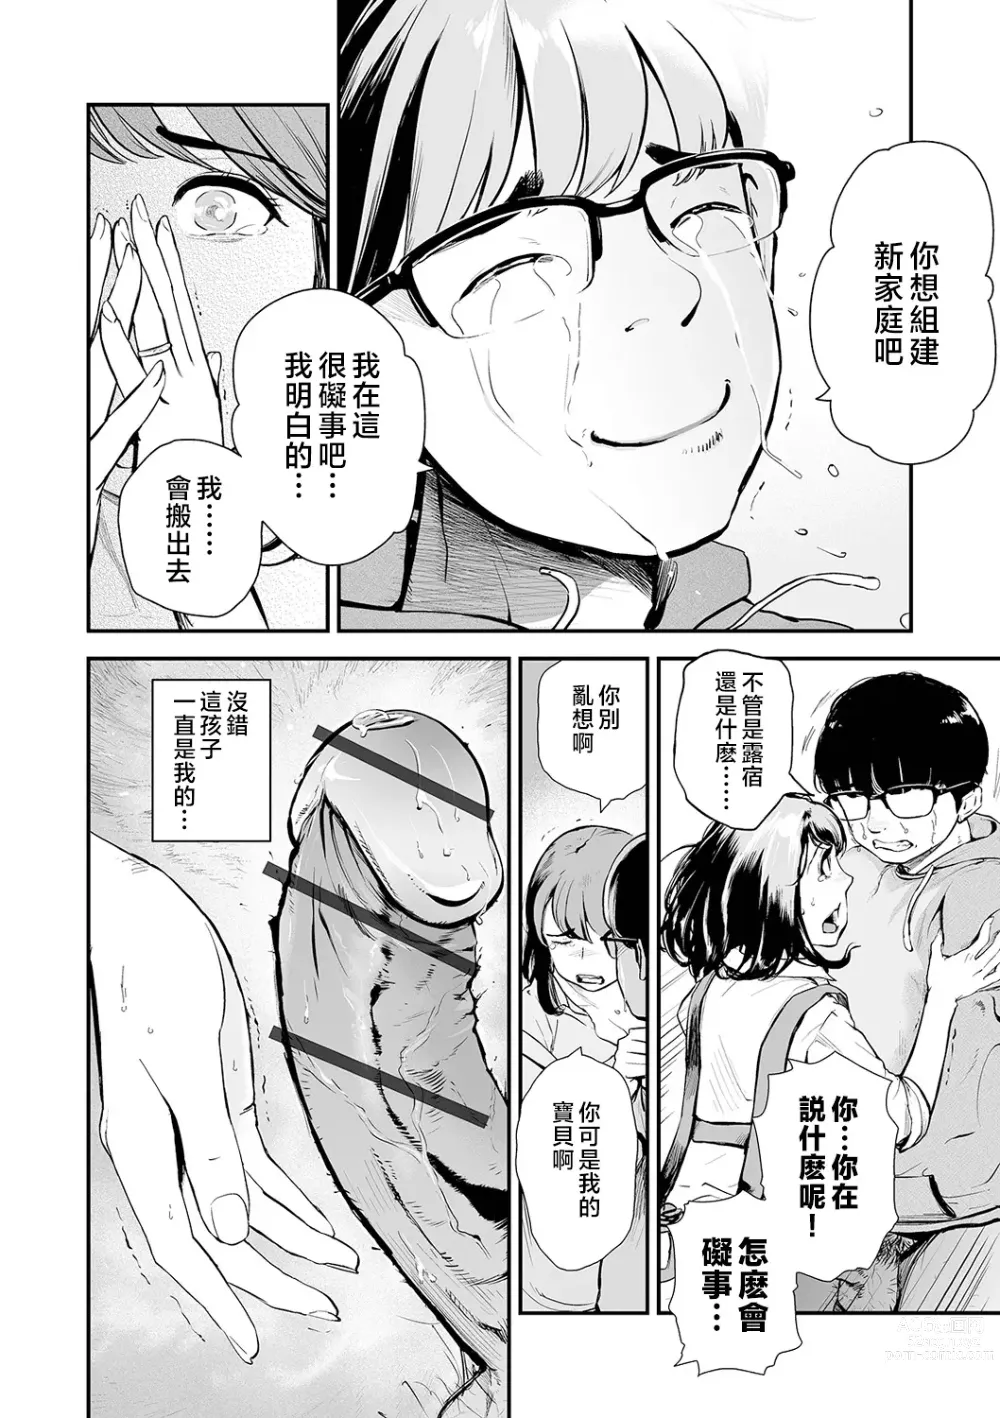 Page 4 of manga Re mama hame